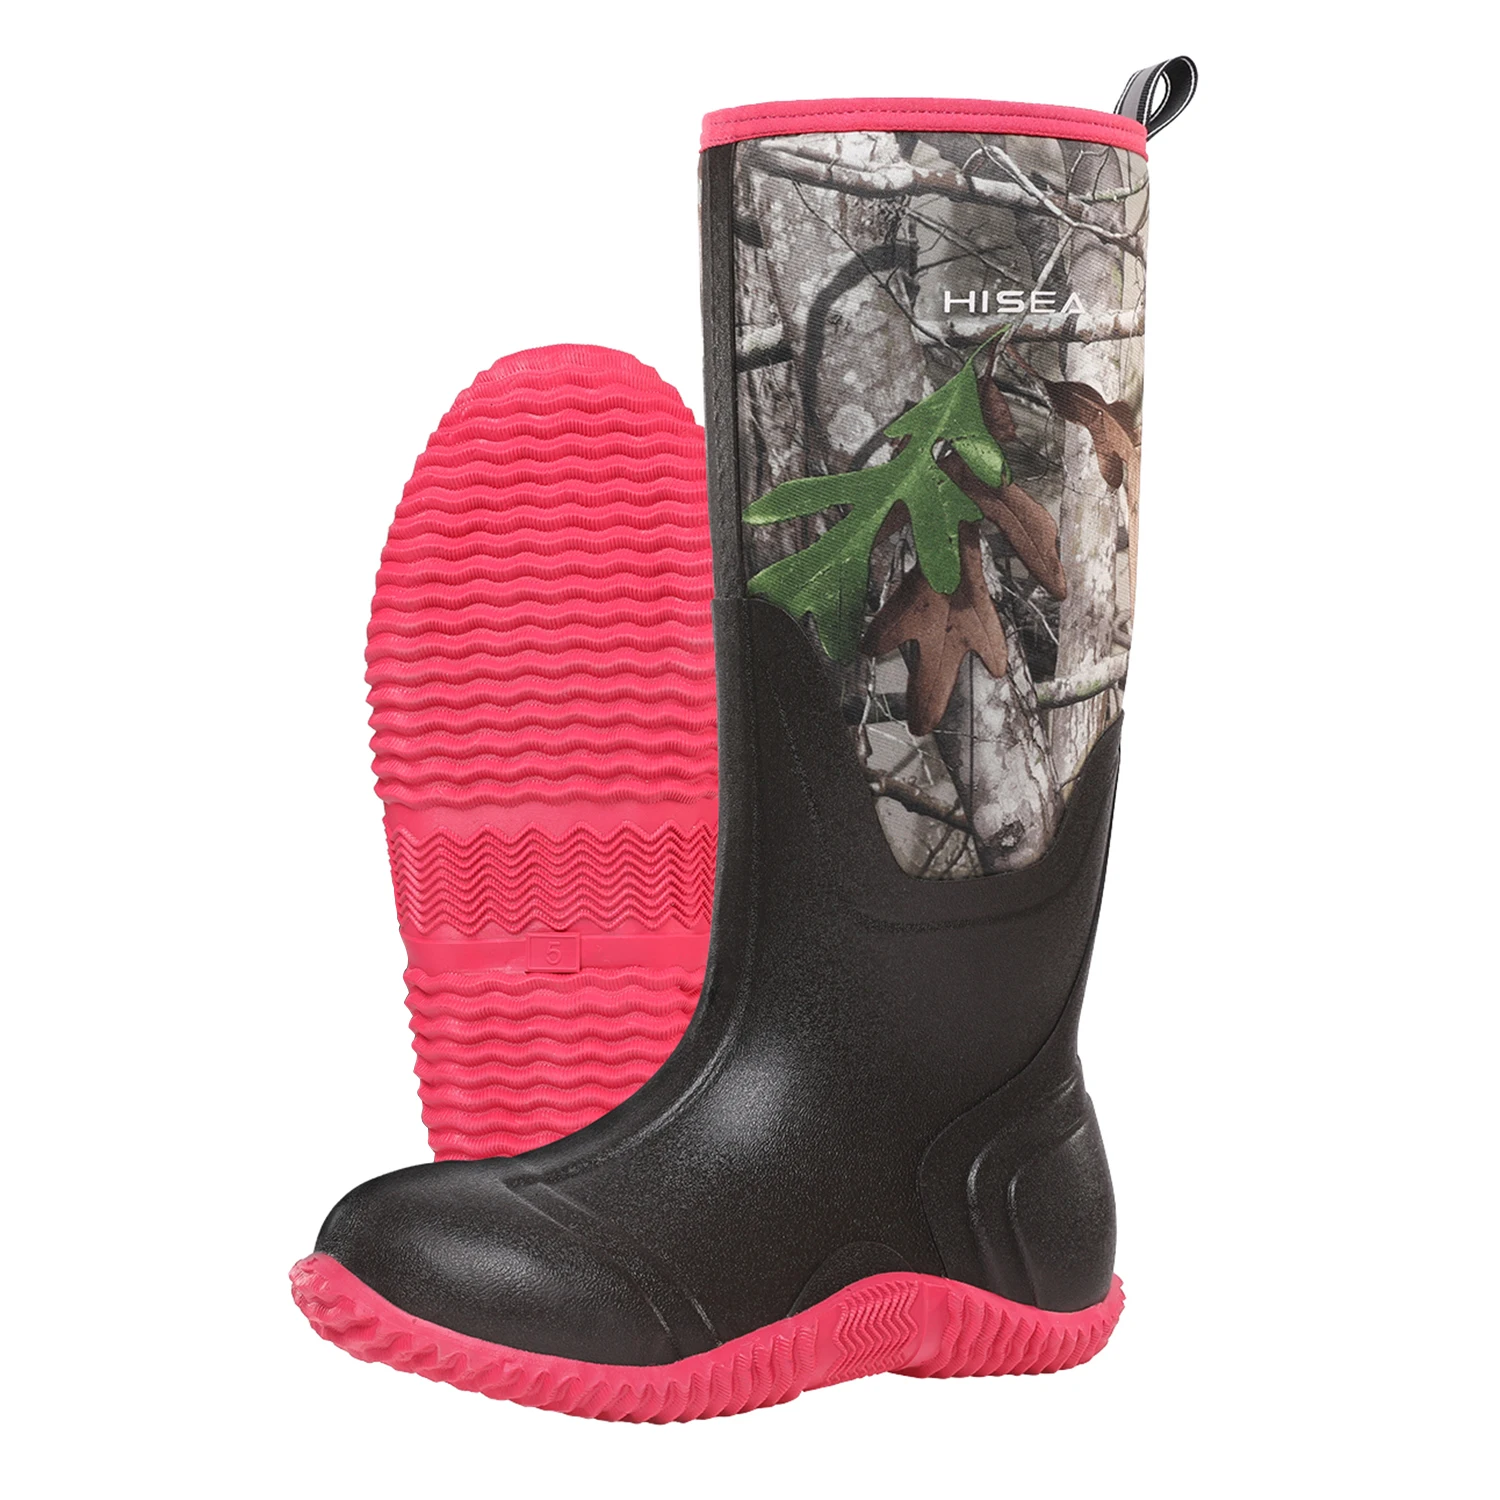 

HISEA Women's Rubber Rain Boots Waterproof Insulated Garden Shoes Outdoor Hunting Working Riding Muck Neoprene Mid Calf Boot